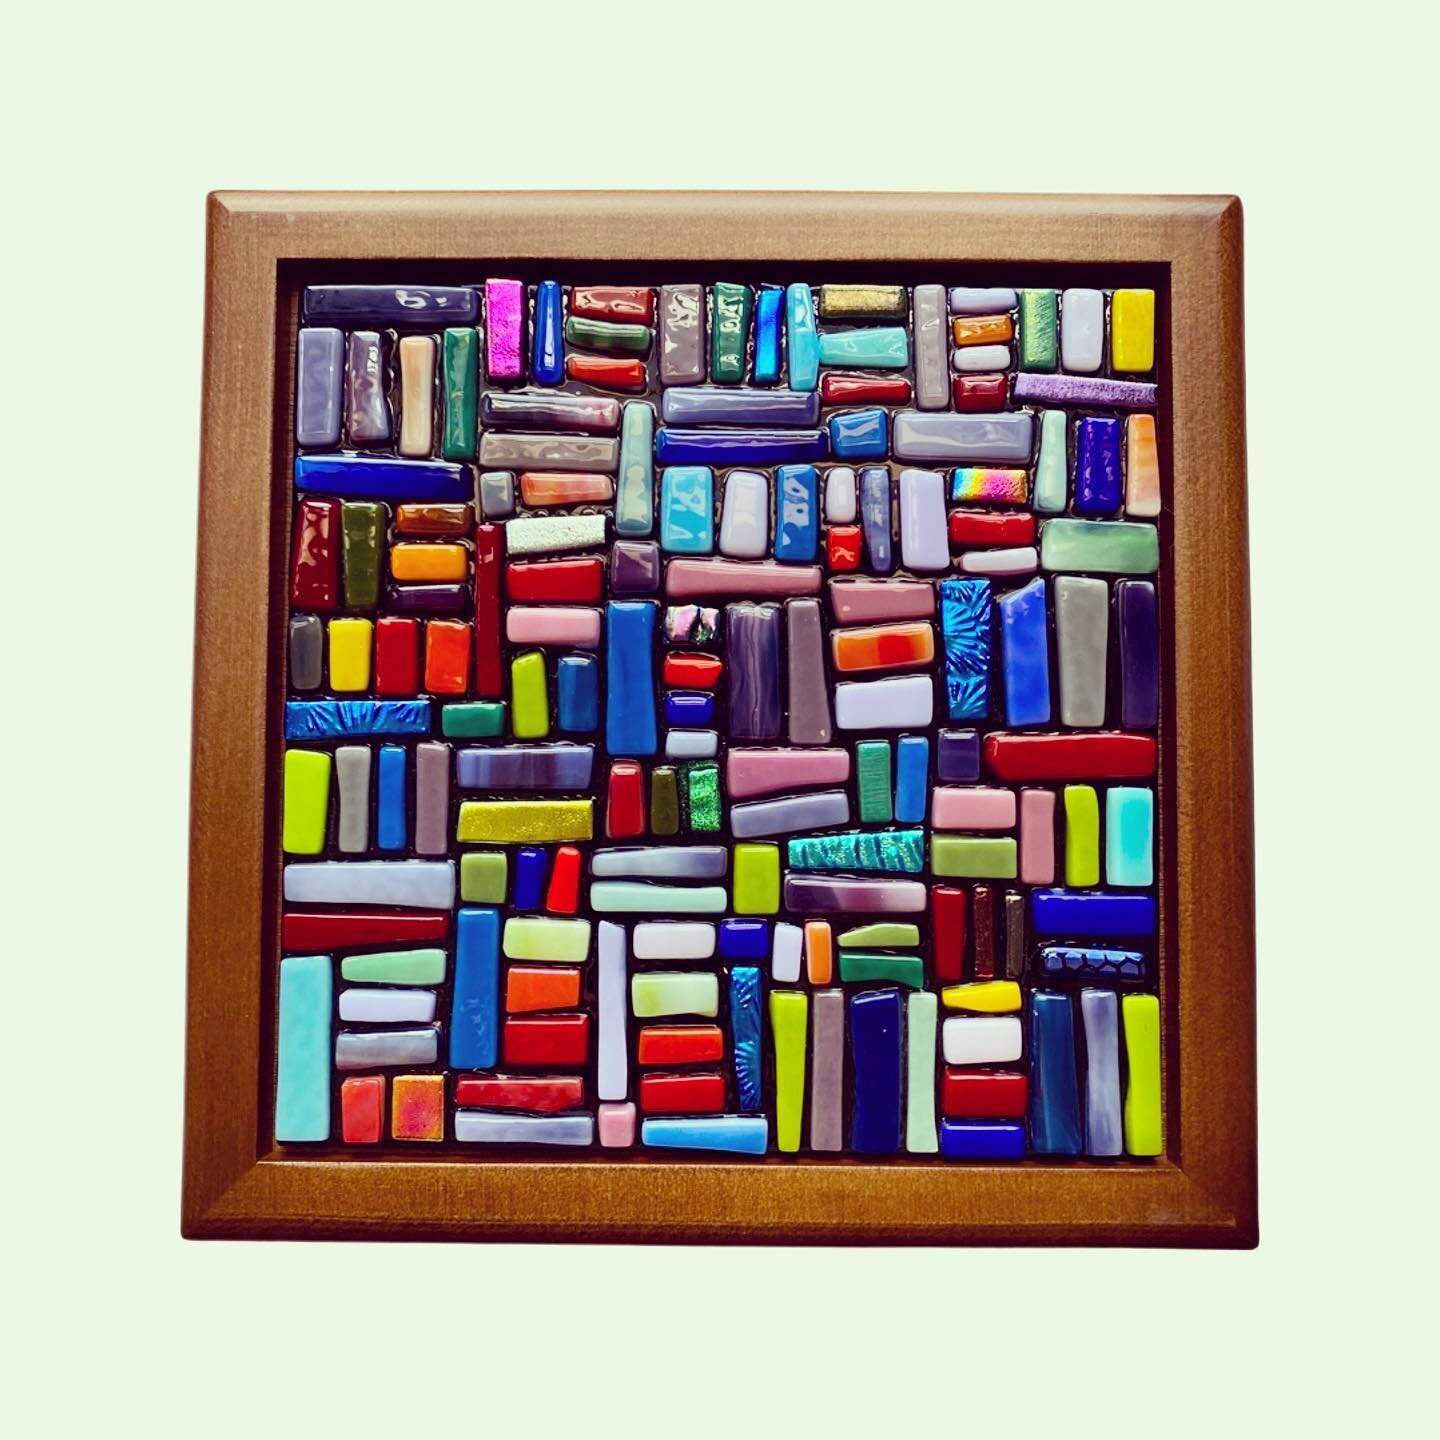 Bitty Mosaic Box $78.00
#fusedglassart #jewelrybox #stashbox #mothersdaygift #shopsmallbusiness #supportwomenartists #bullseyeglassart #chiglasscollective #oneofakind